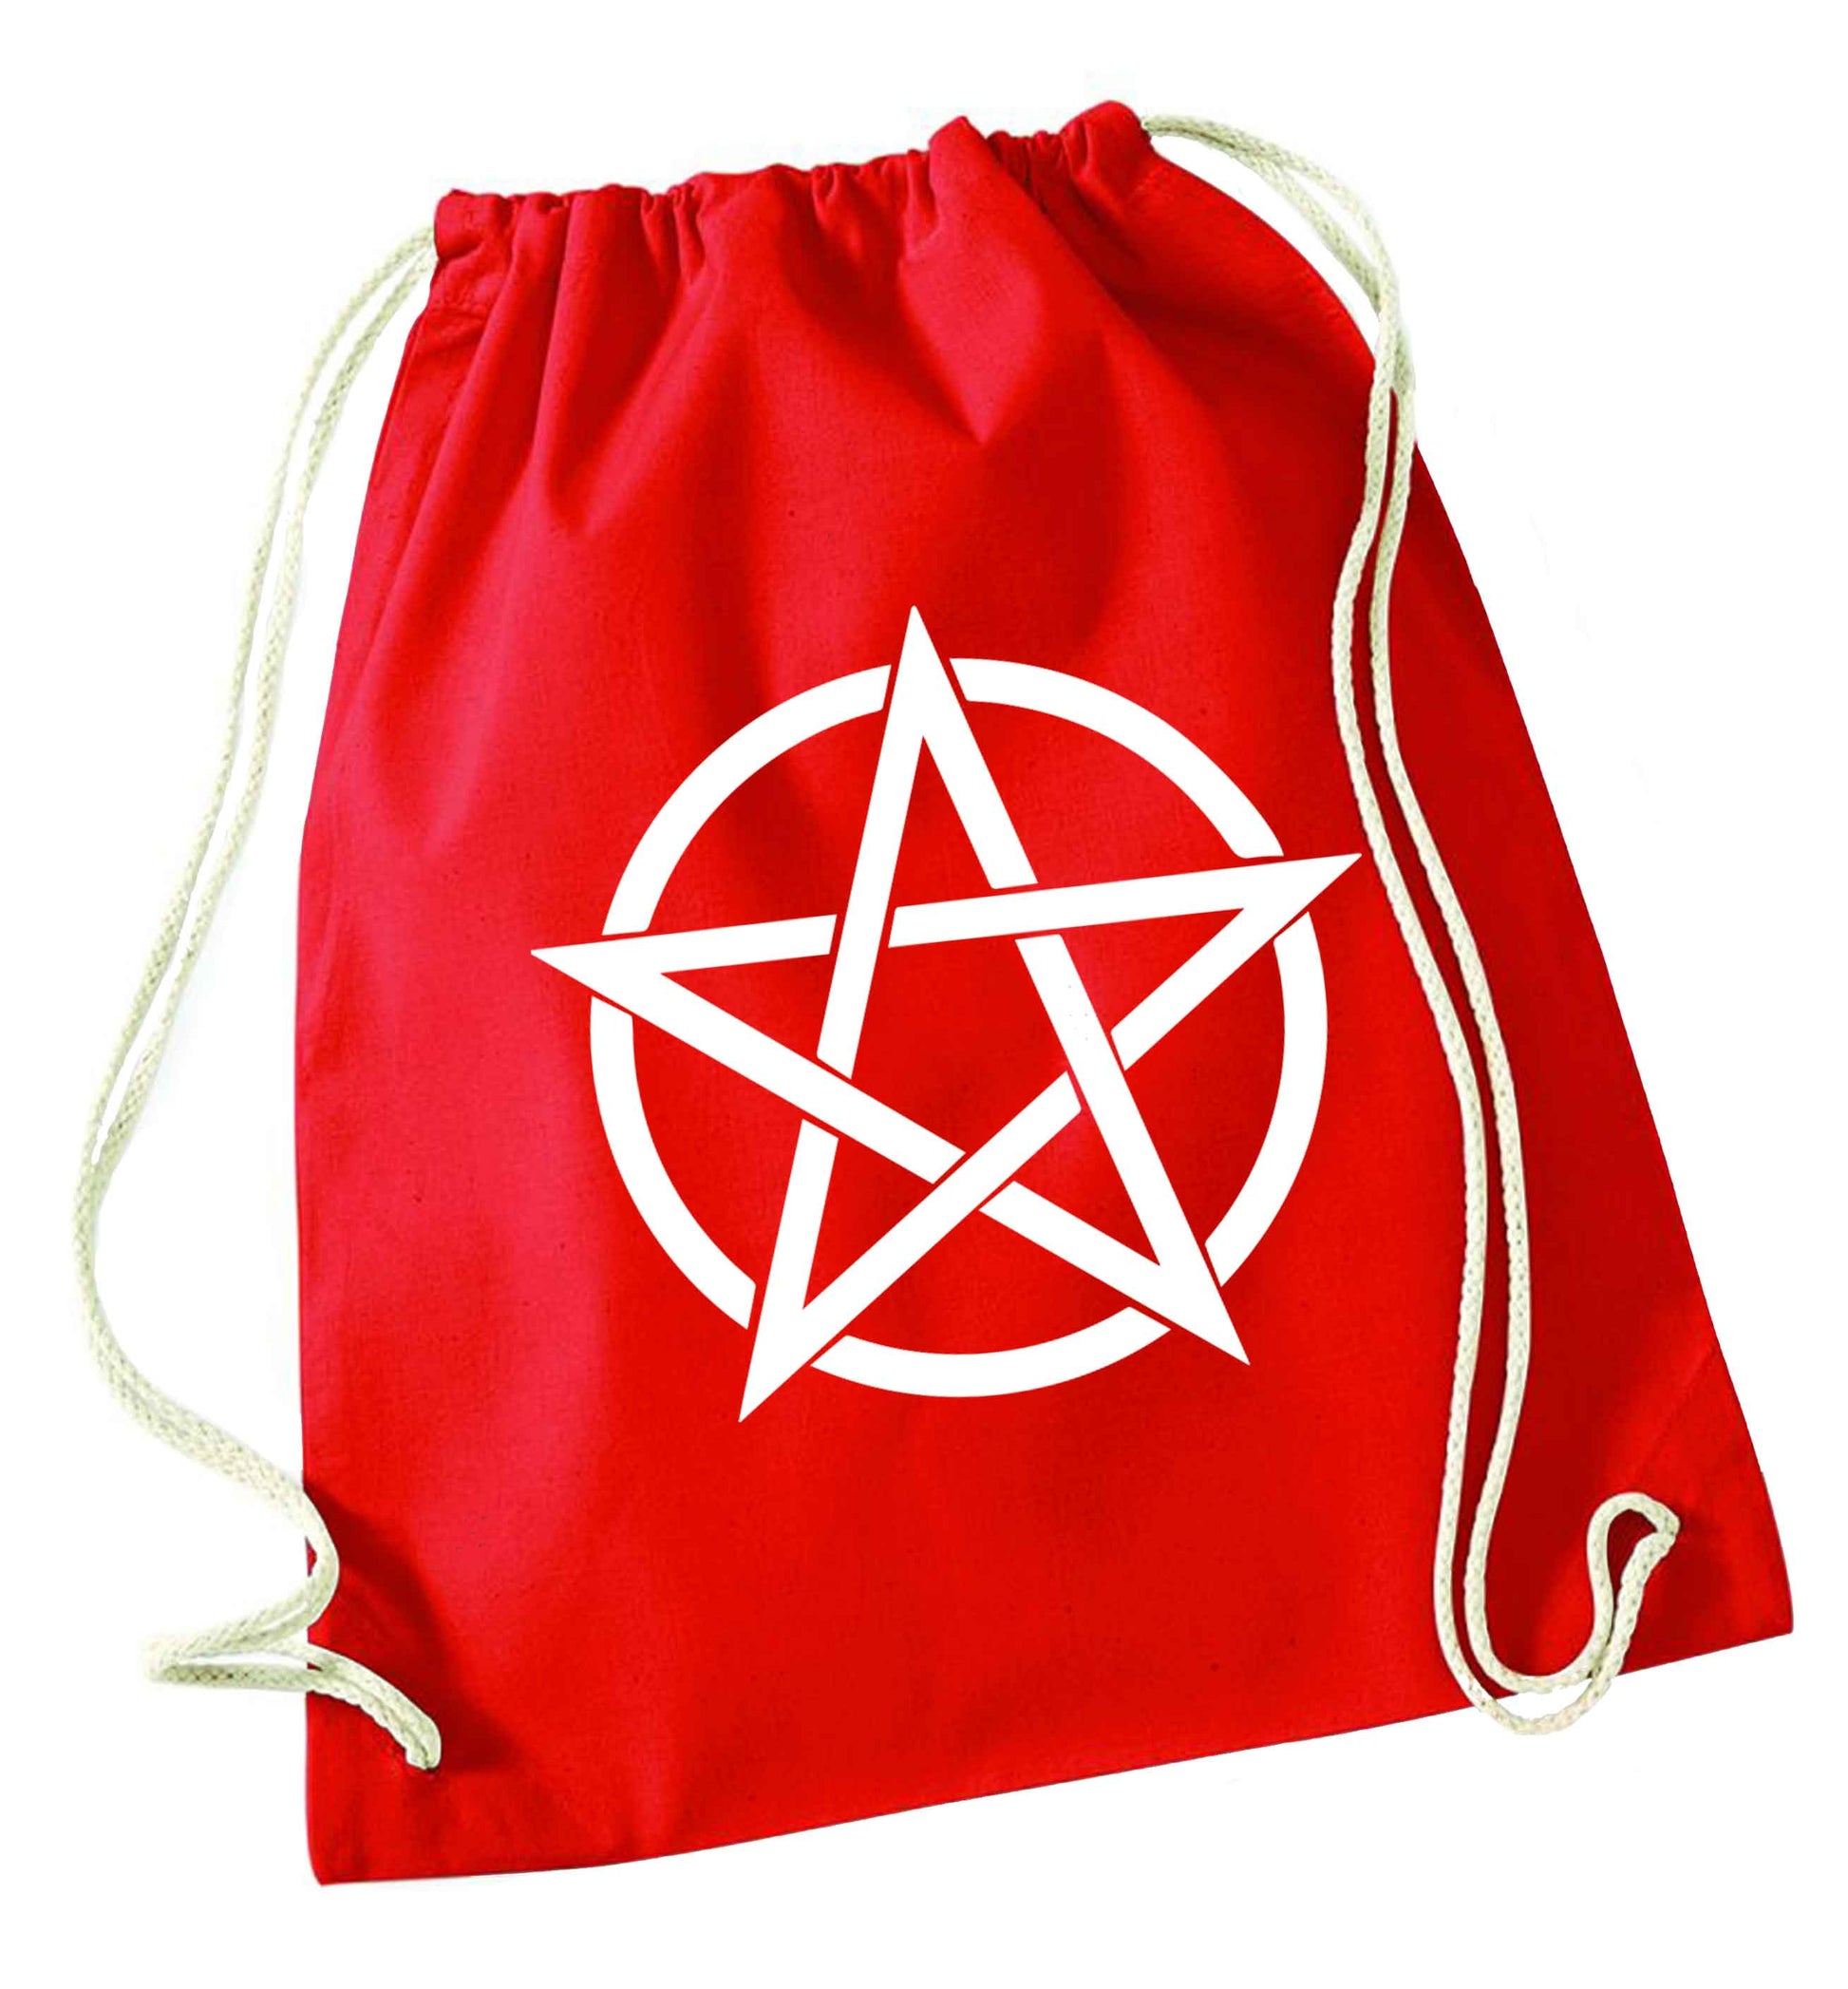 Pentagram symbol red drawstring bag 